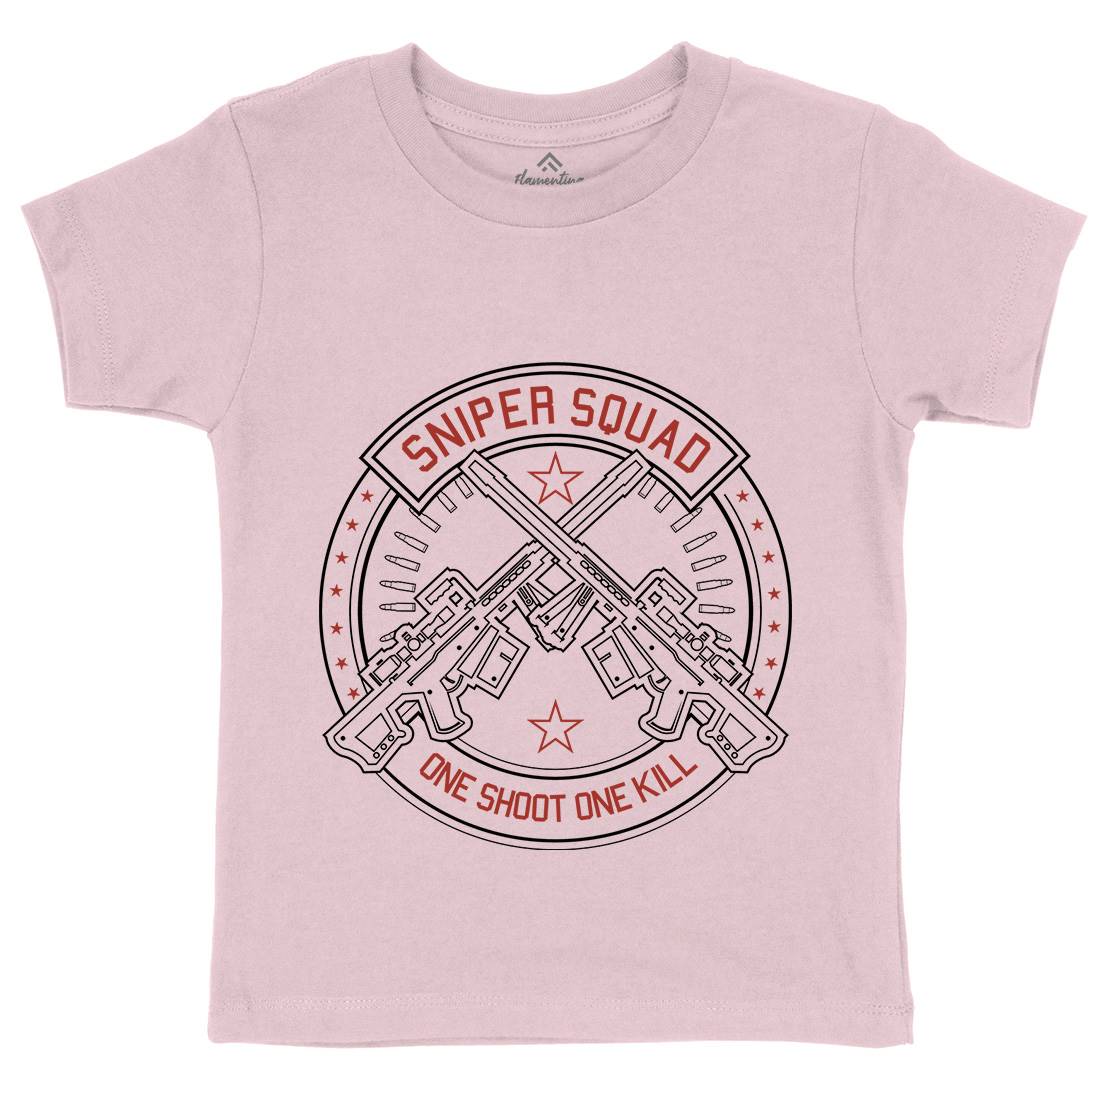 Sniper Squad Kids Crew Neck T-Shirt Army A279